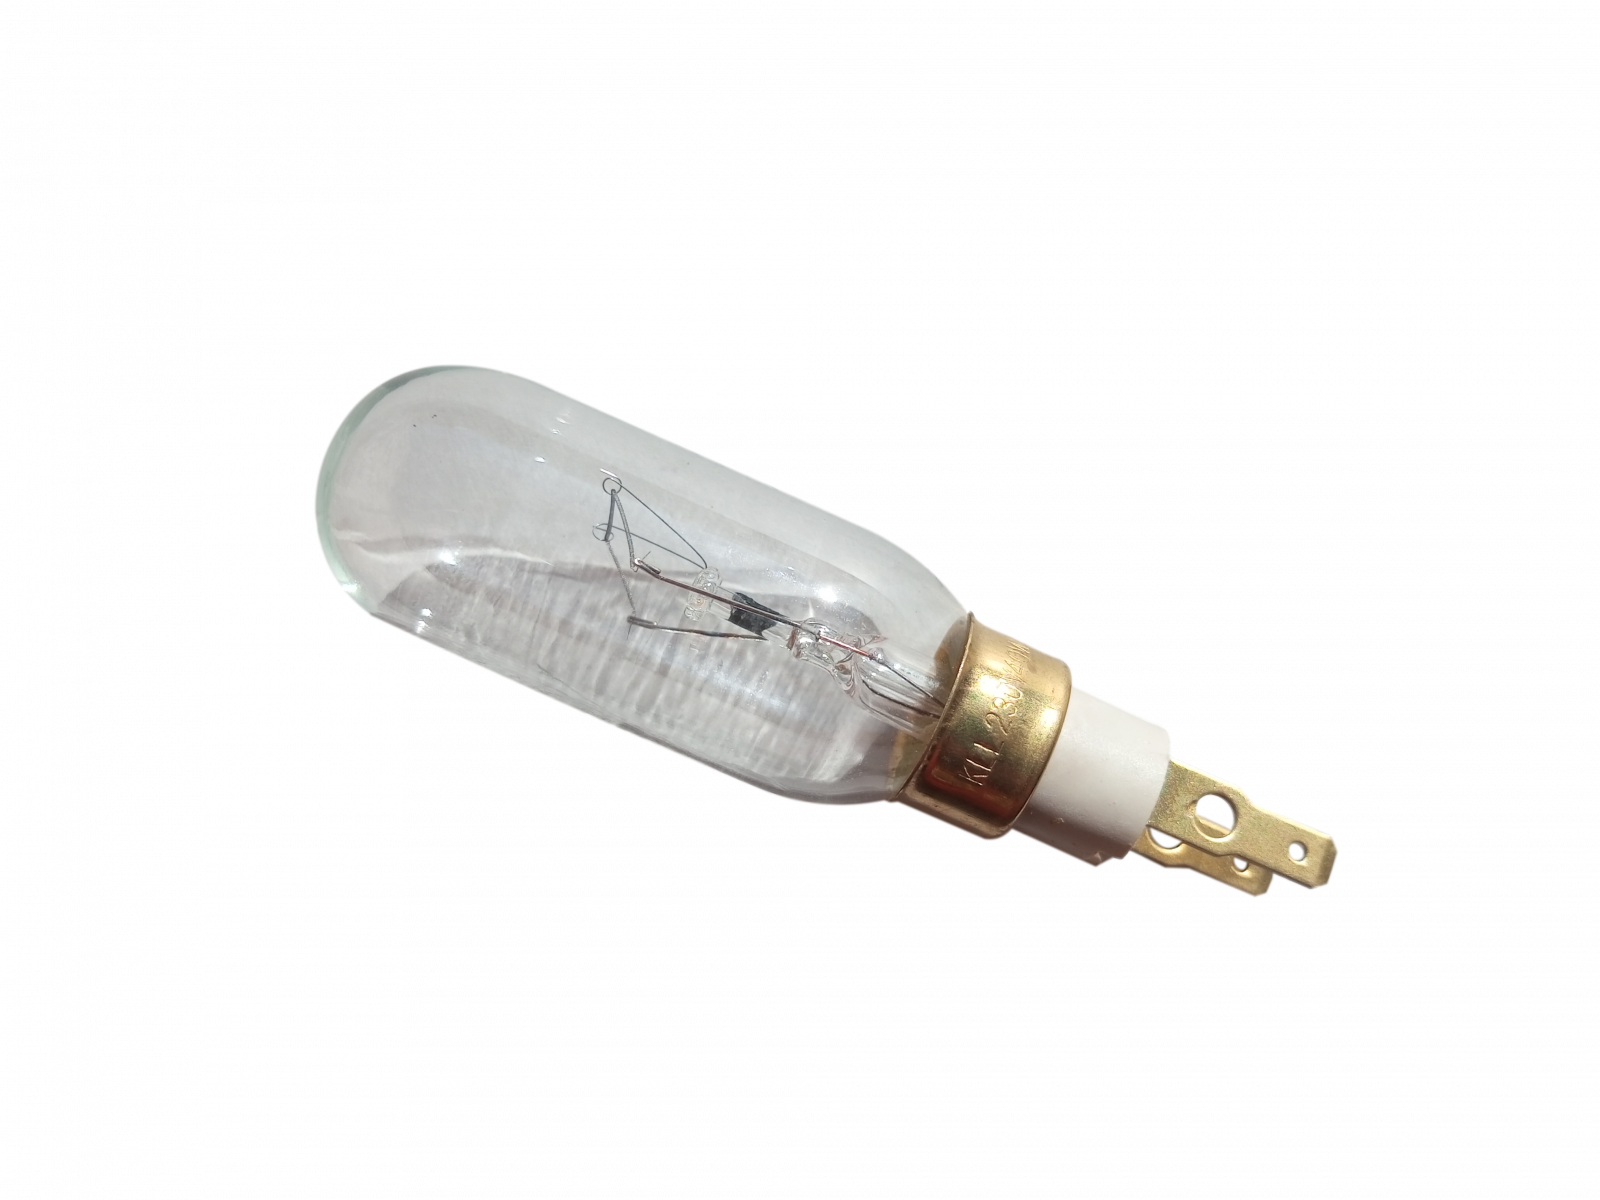 40W Bulb for Whirlpool Indesit Fridges - 484000000986 Whirlpool / Indesit